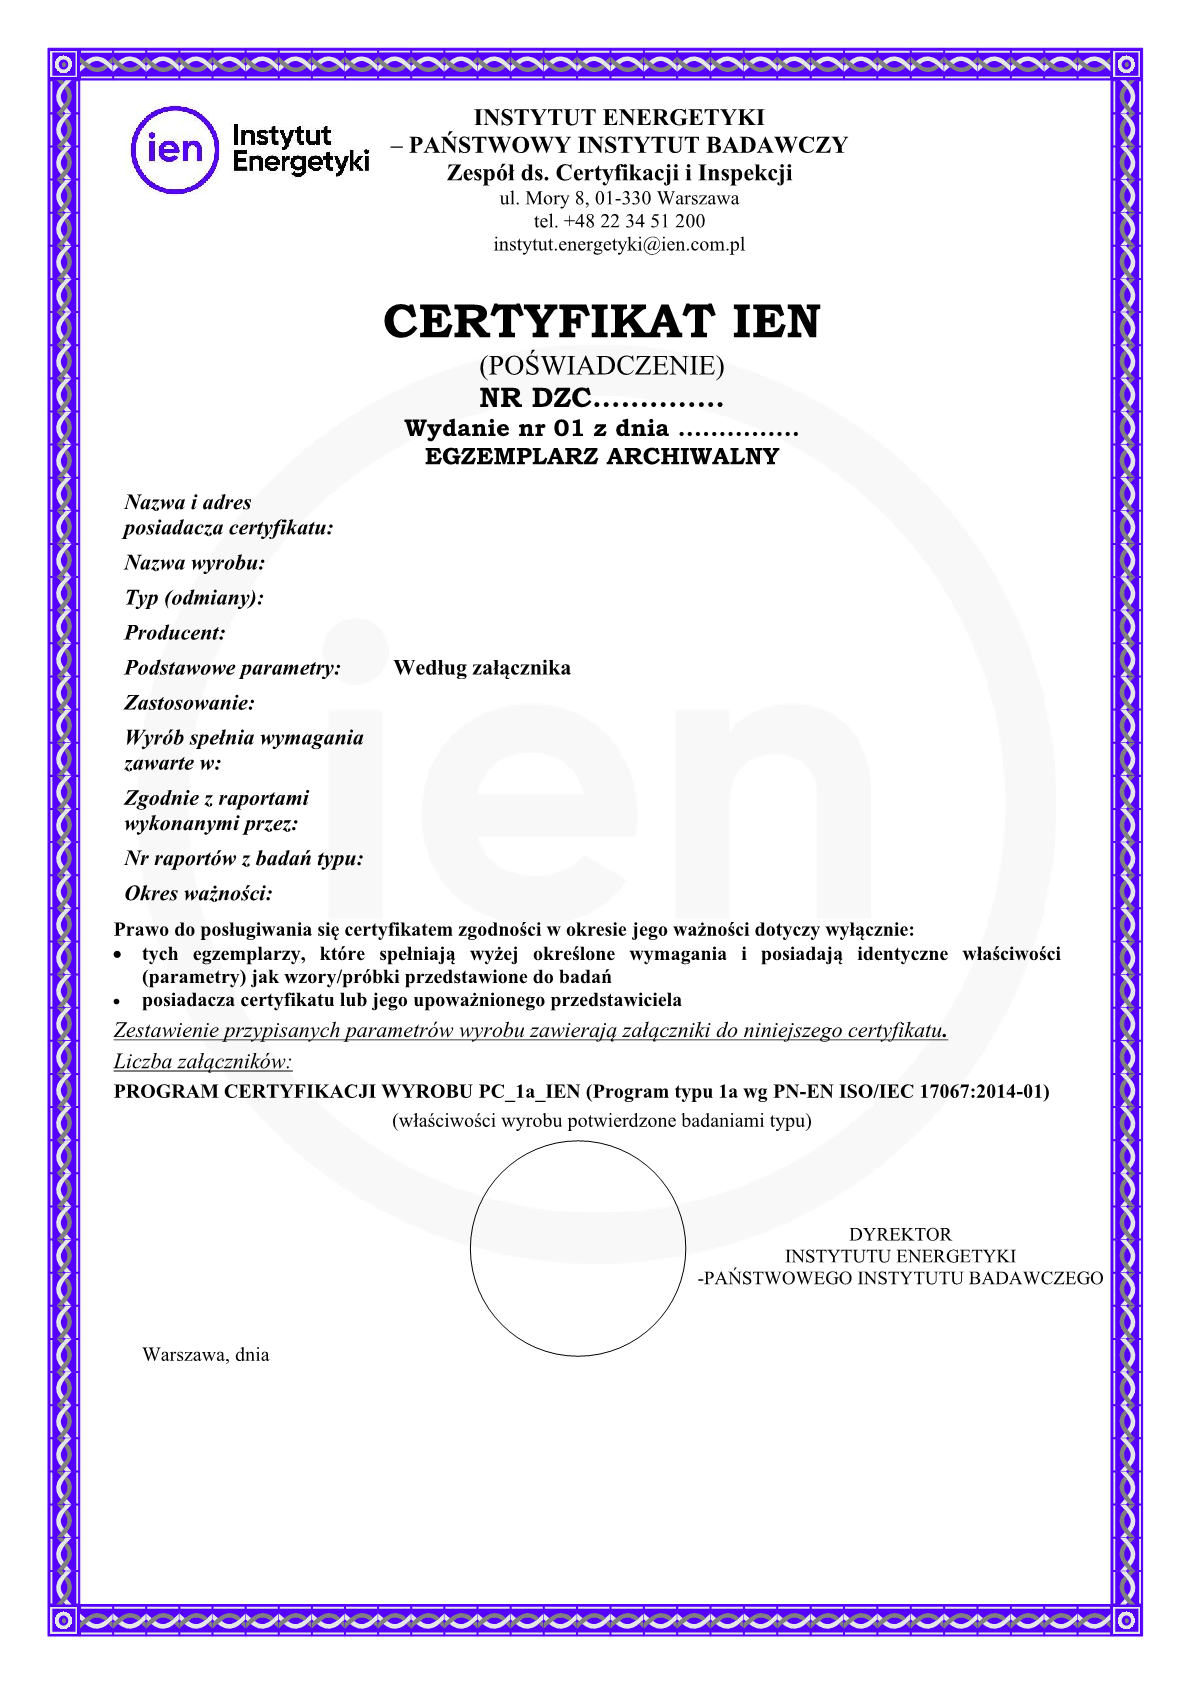 PJC 01 z11 IEN wzor certyfikakt IEN1